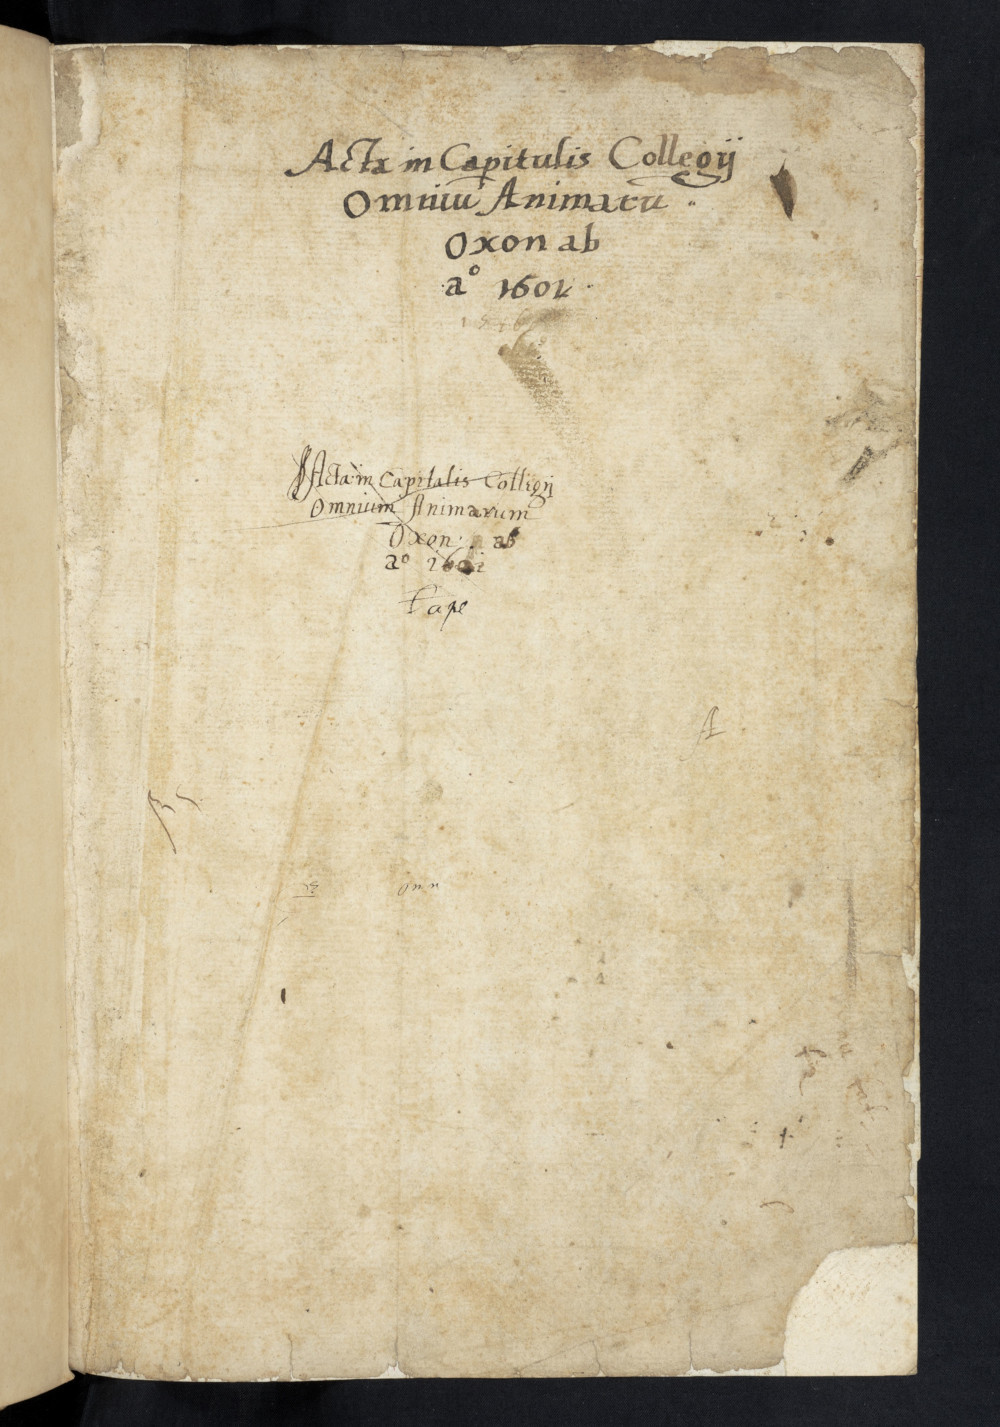 Folio iii recto